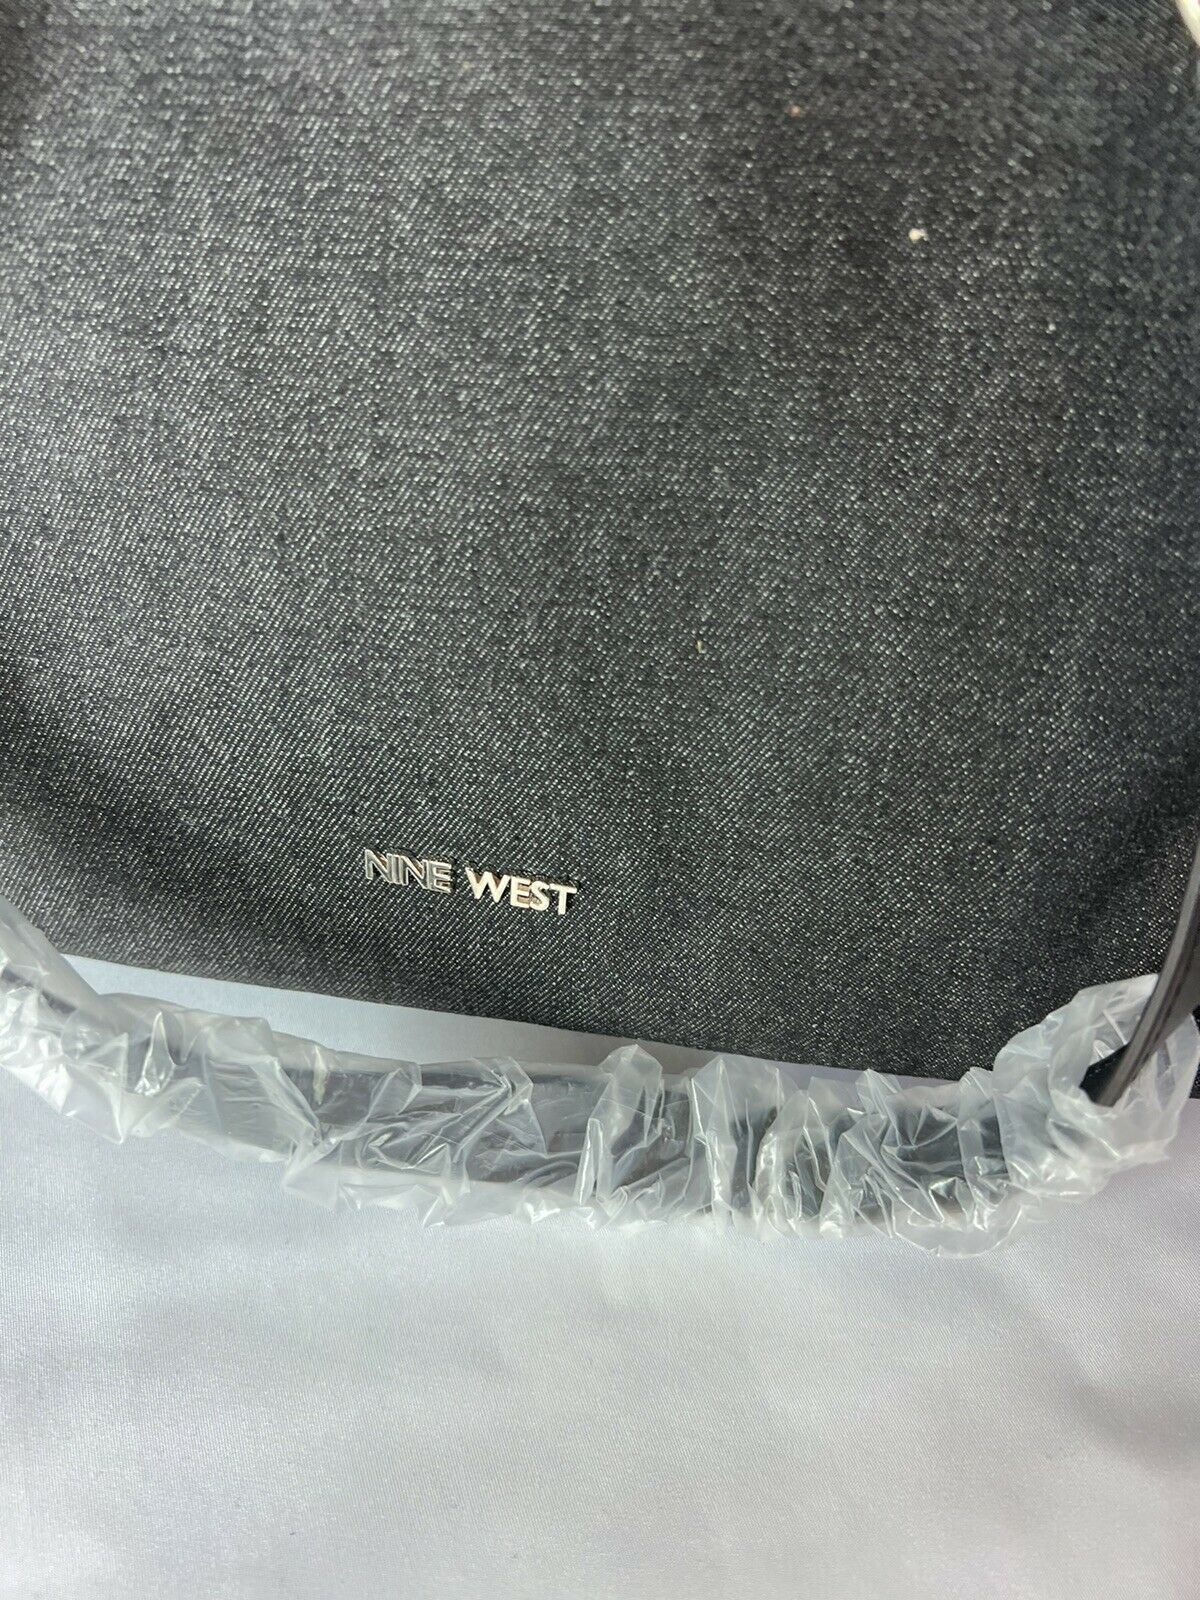 Nine West Trixi Tote Bag